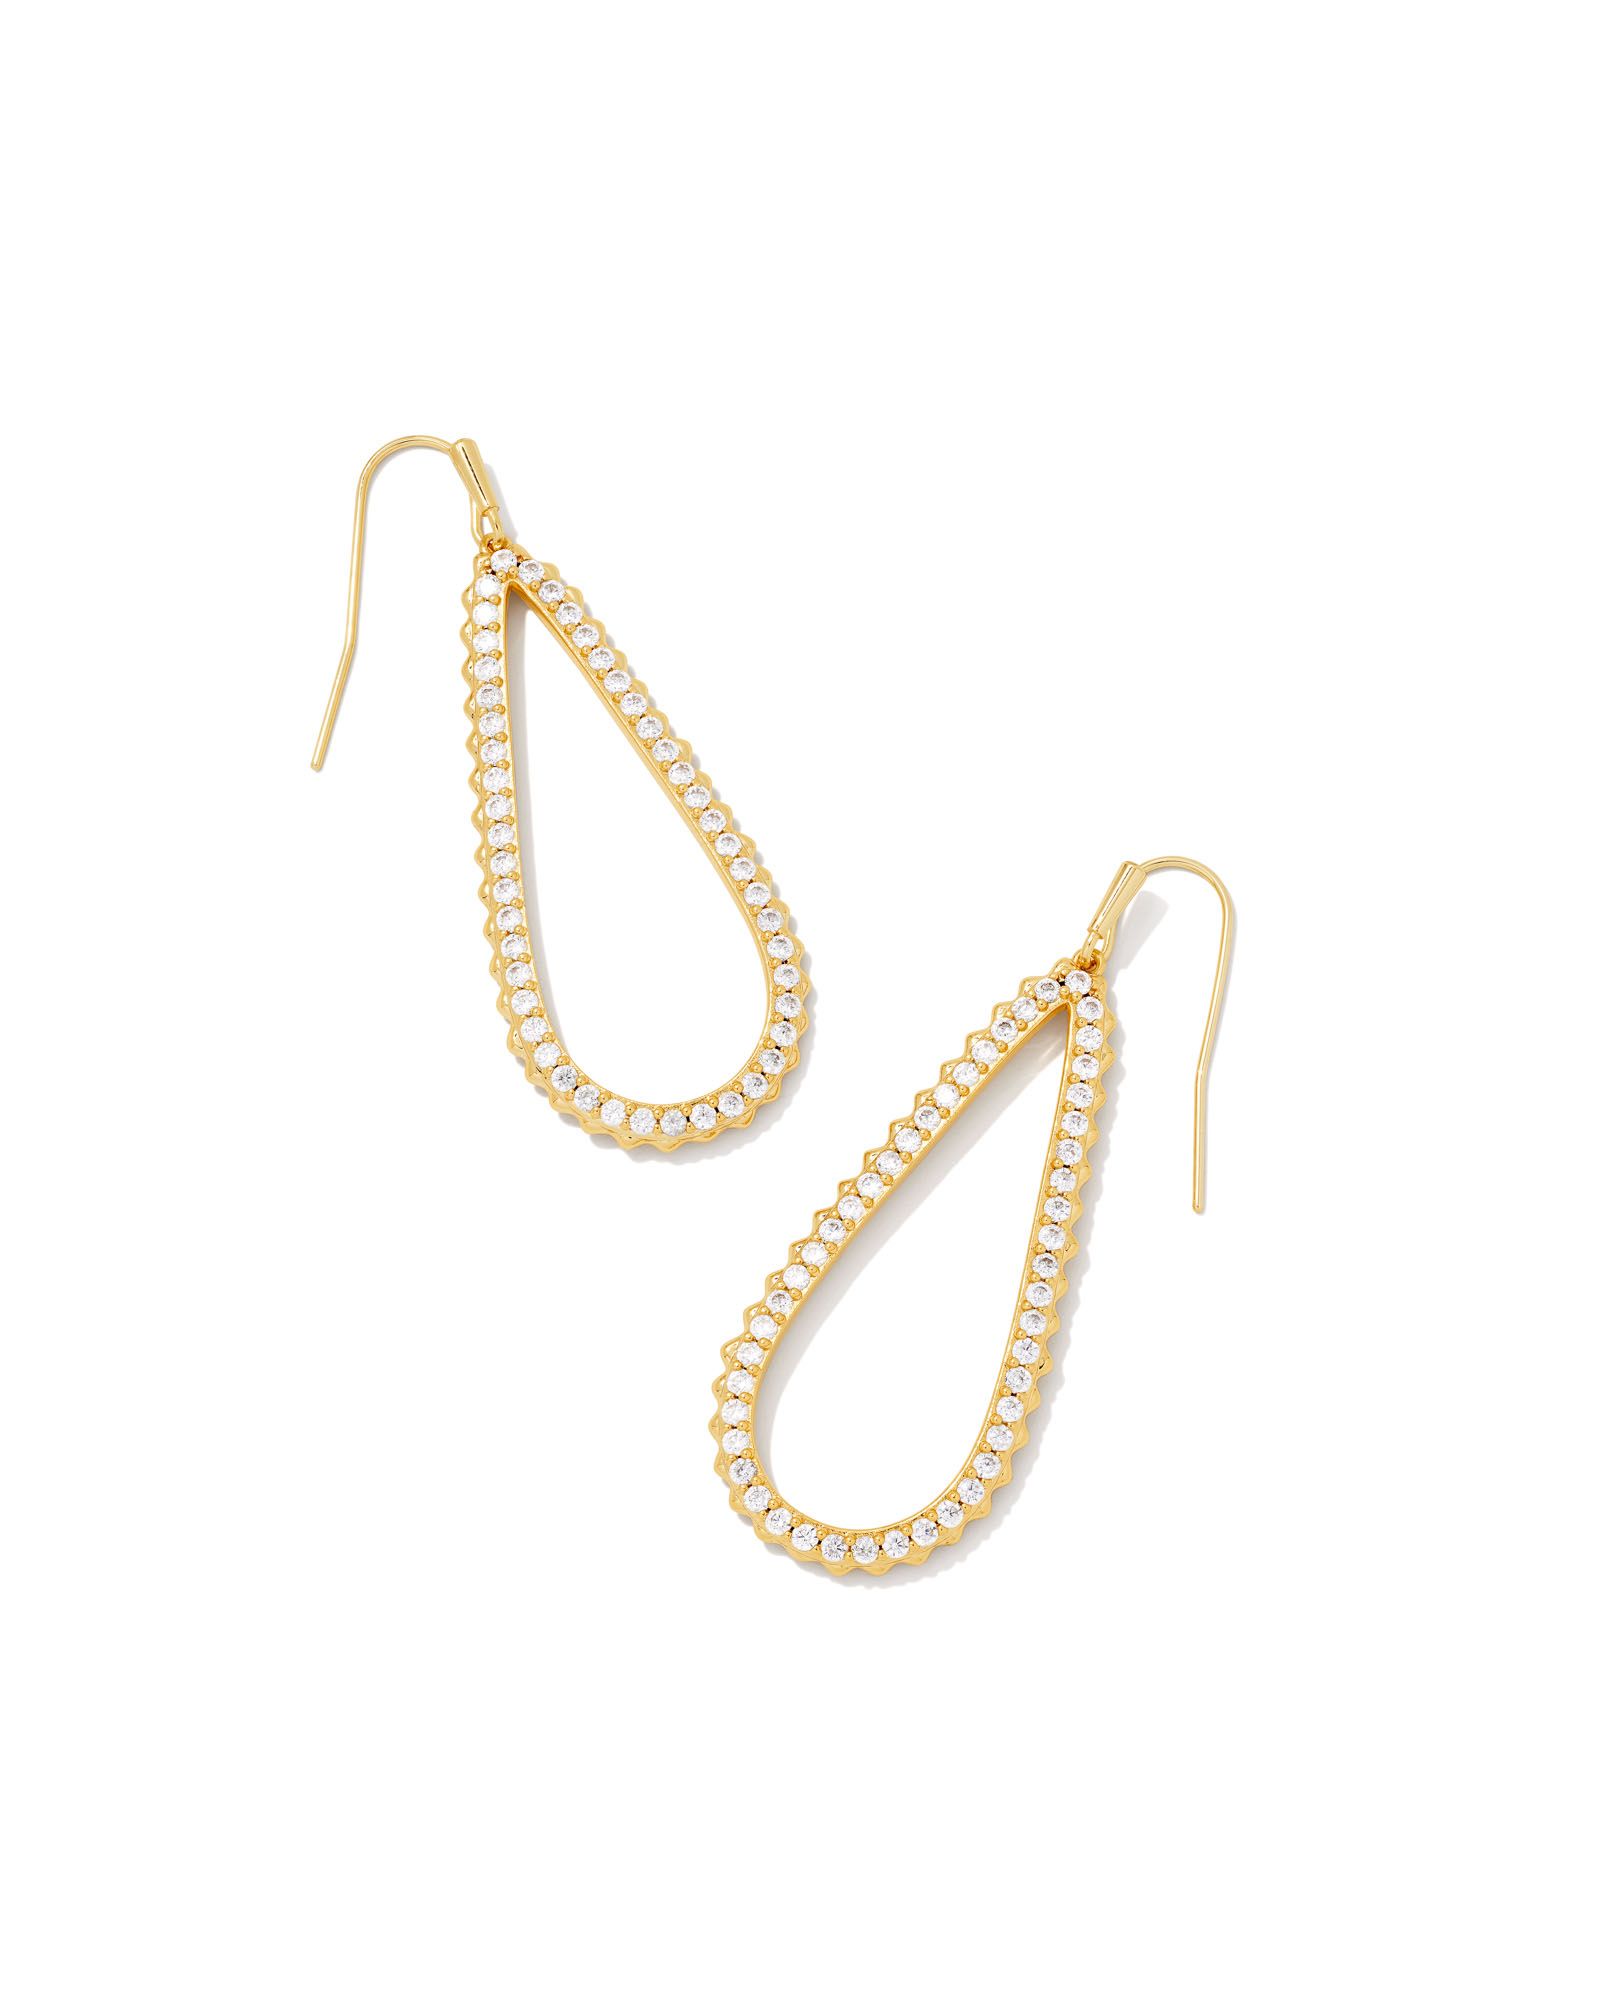 Payton Gold Open Frame Earrings in White Crystal | Kendra Scott | Kendra Scott